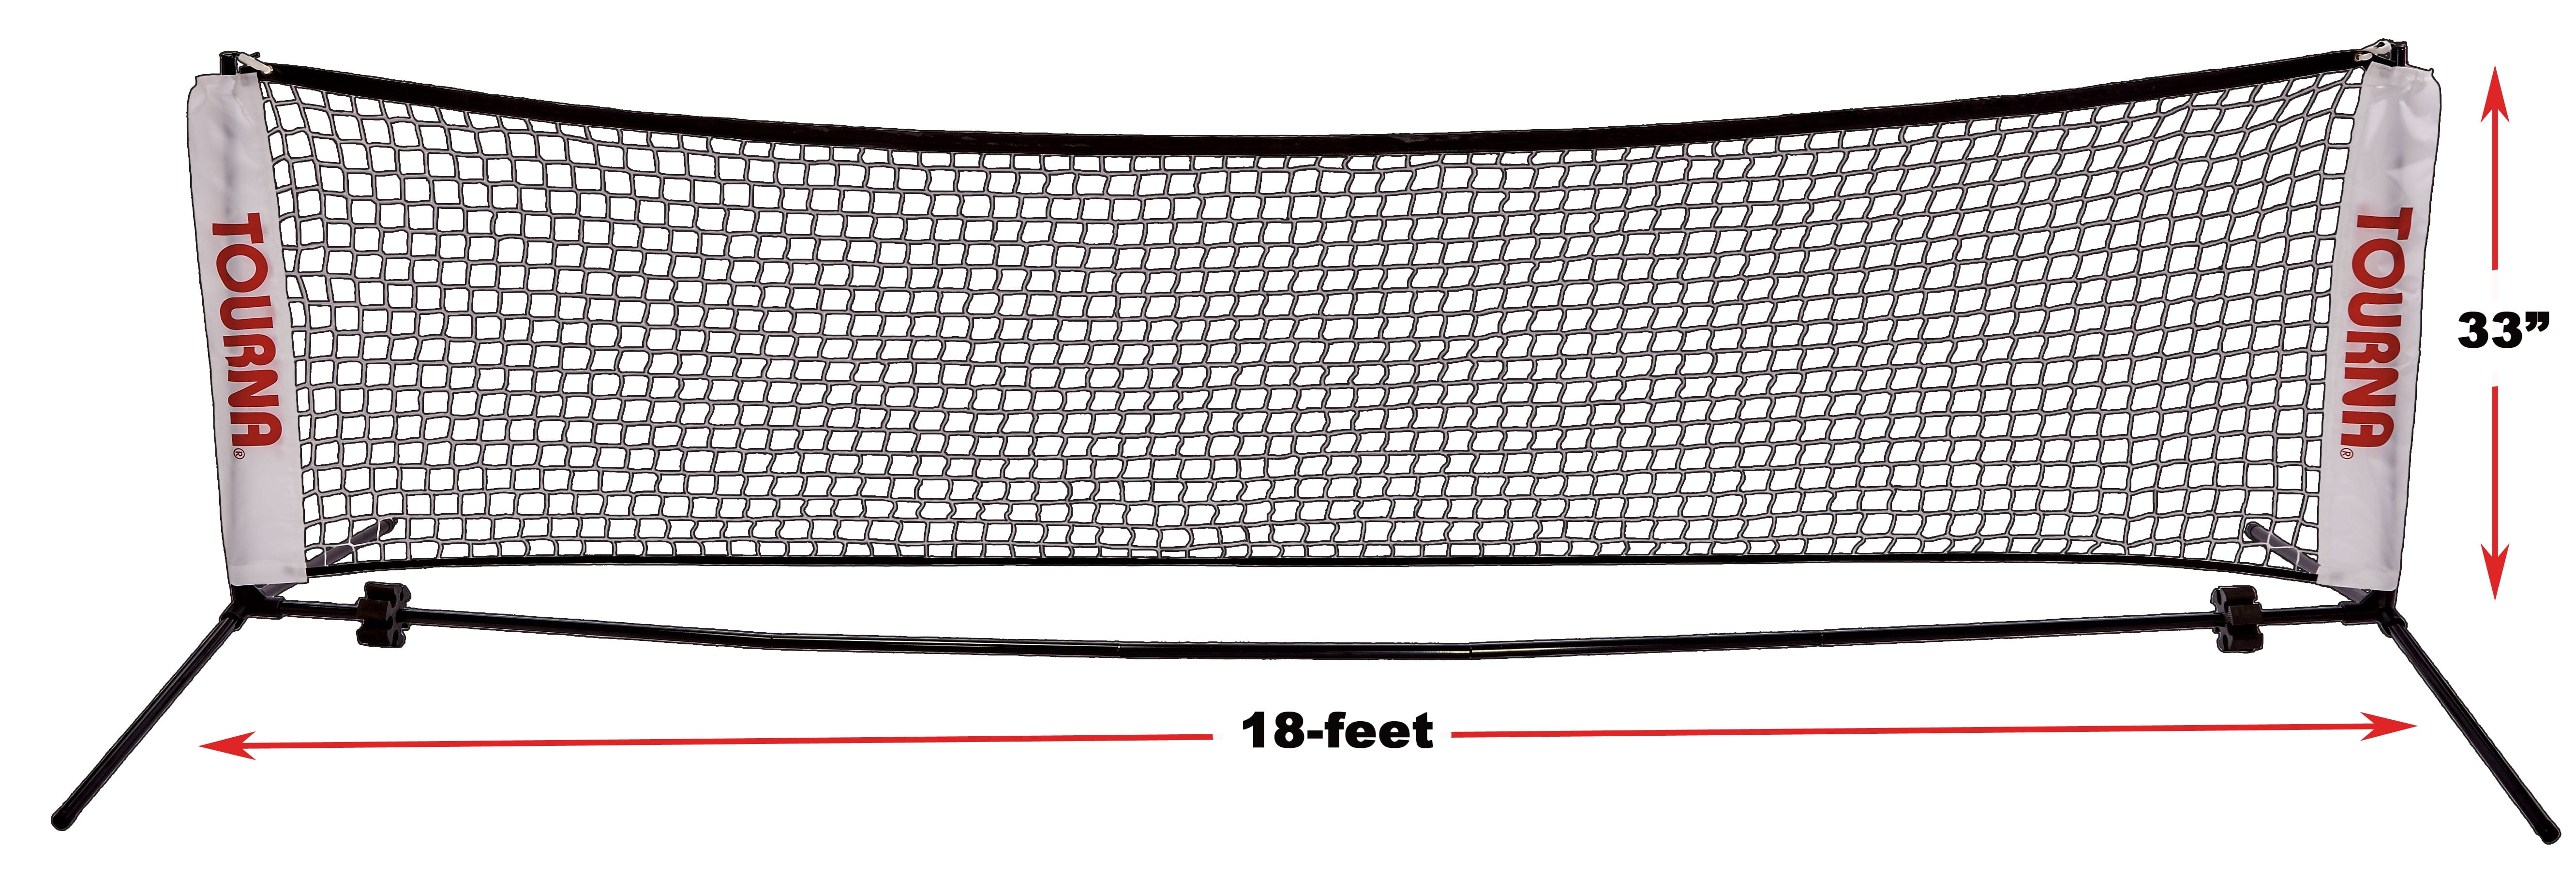 JWBOSS Portable Tennis Net for Driveway Beach Soccer Tennis Net Without Poles